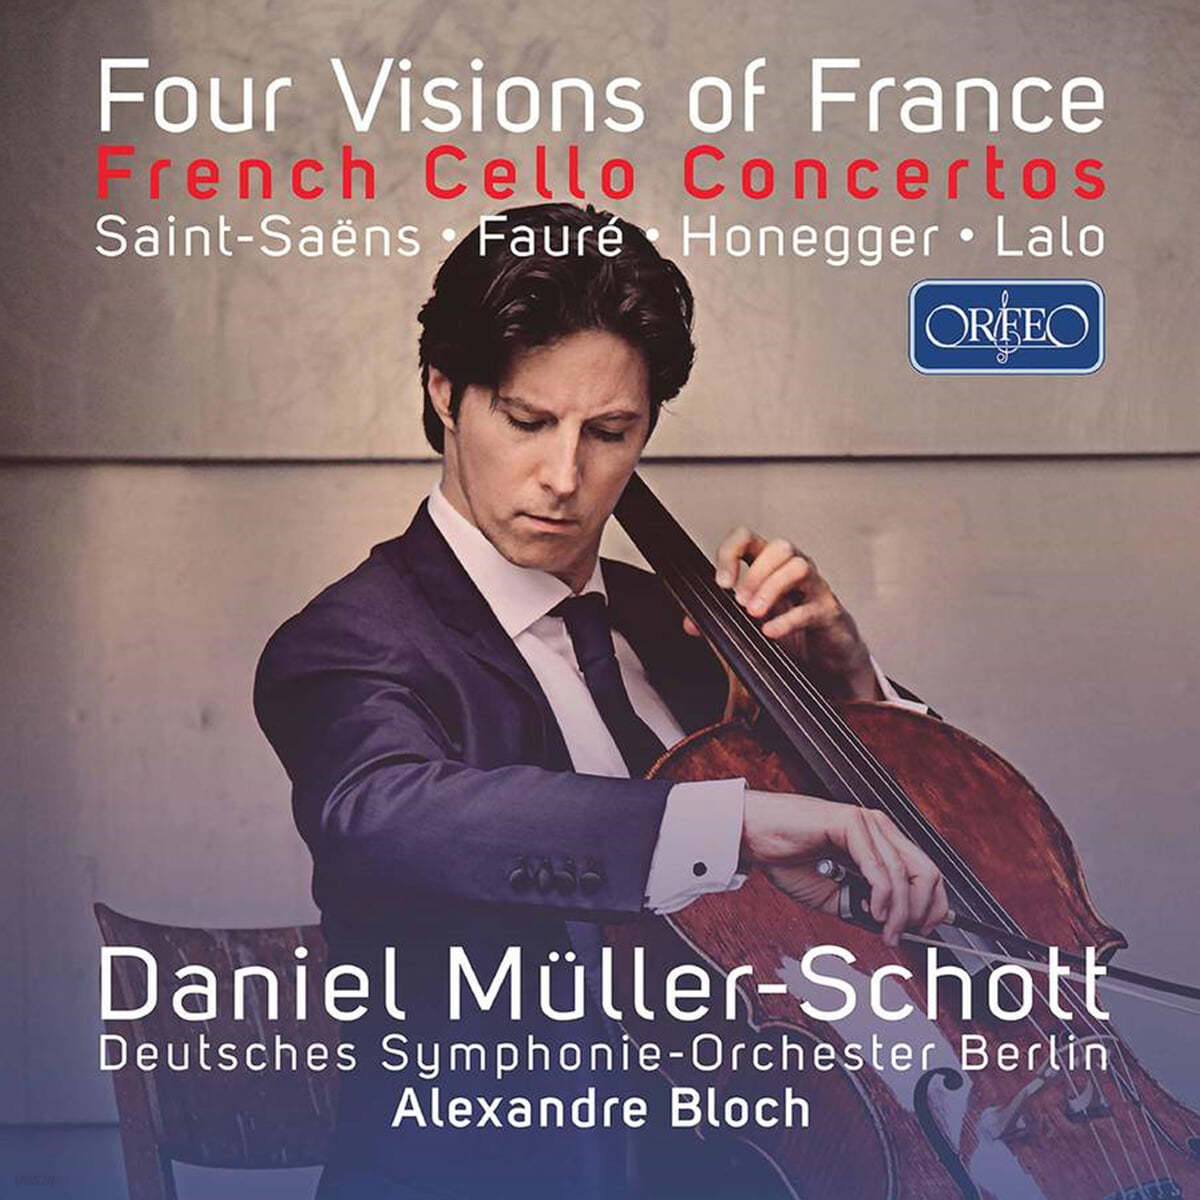 Daniel Muller-Schott 생상스 / 오네게르 / 랄로: 첼로 협주곡 - 다니엘 뮐러-쇼트 ( Four Visions of France)